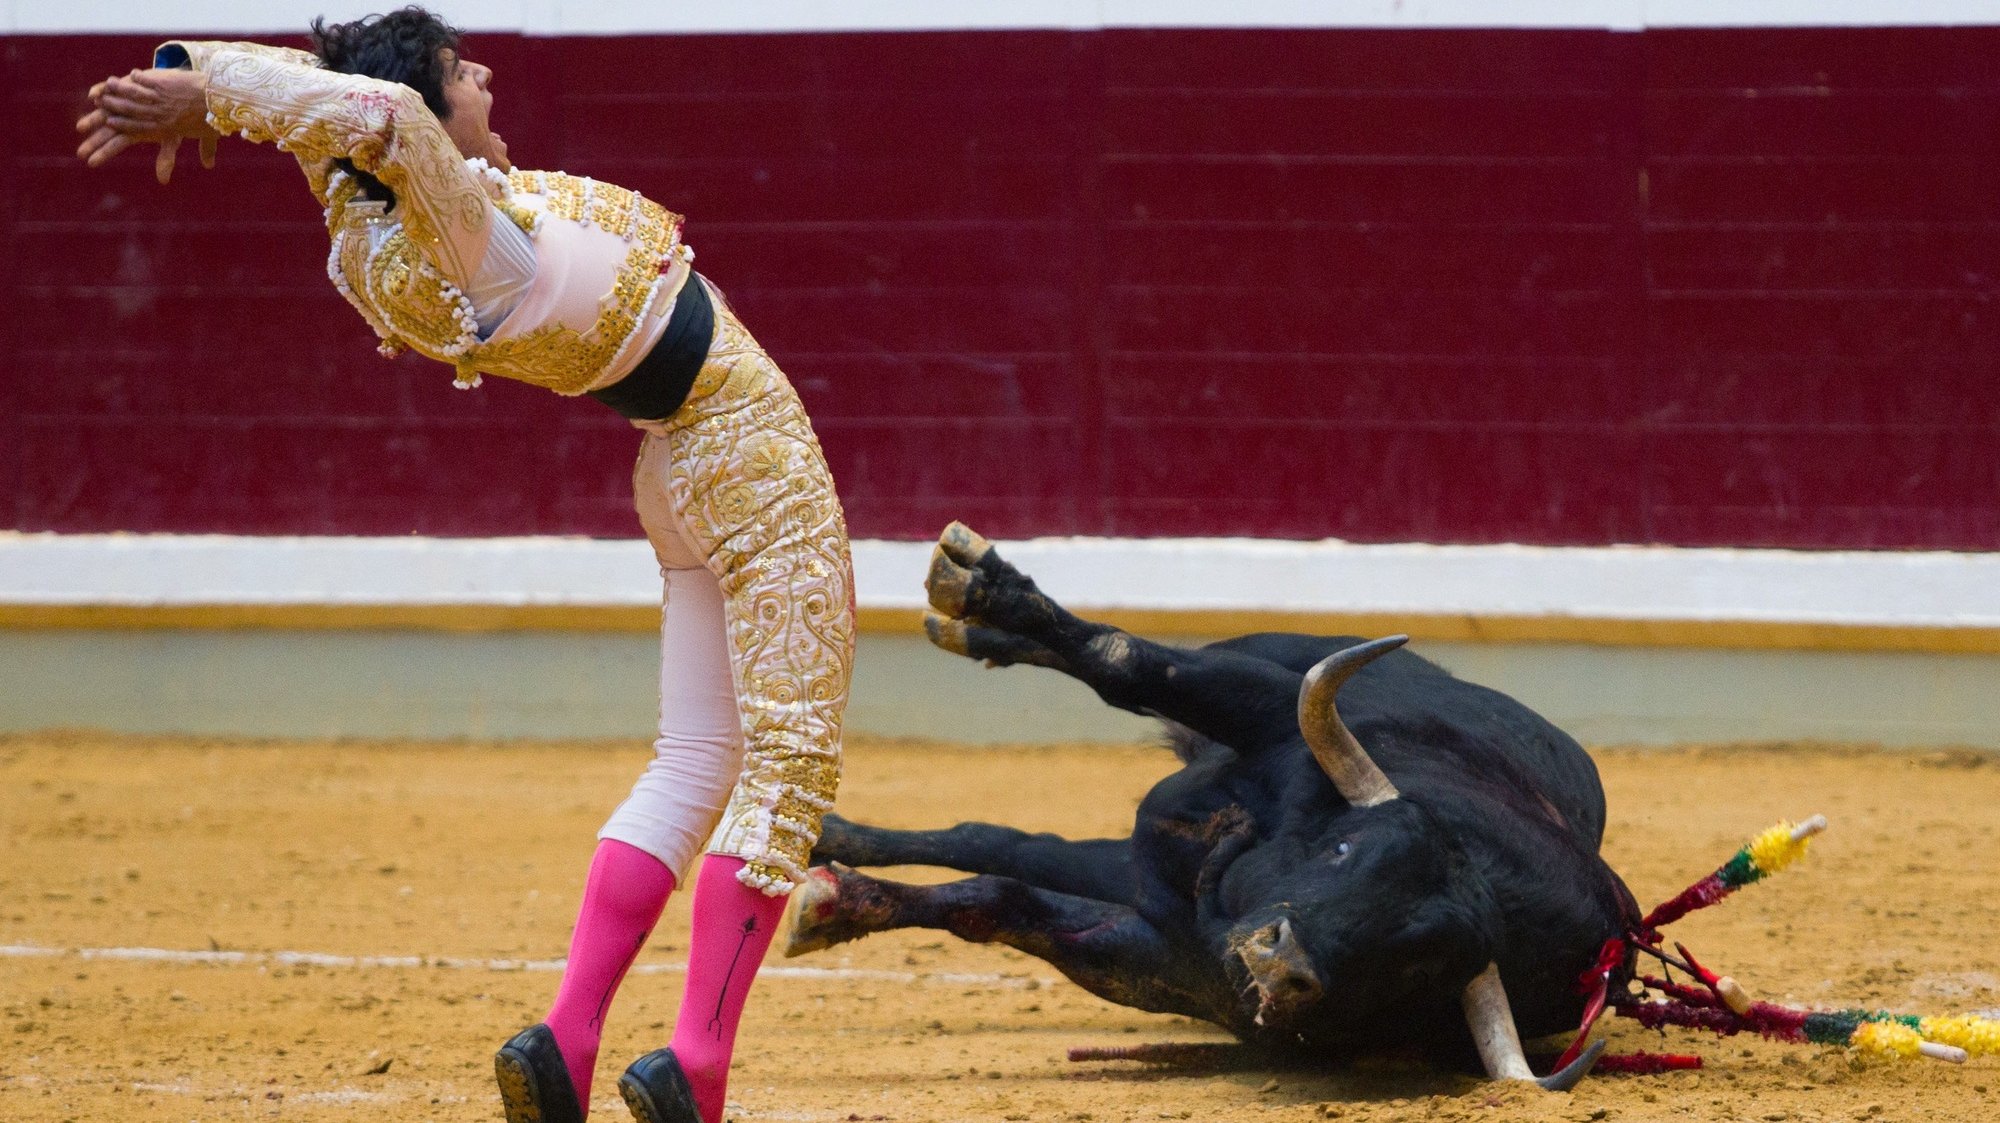 epa06217030 Mexican bullfighter Luis David Adame perfoms during San Mateo bullfighting fair at Ribera bullring in Logrono, Spain, 20 September 2017 (issued 21 September 2017).  EPA/ABEL ALONSO